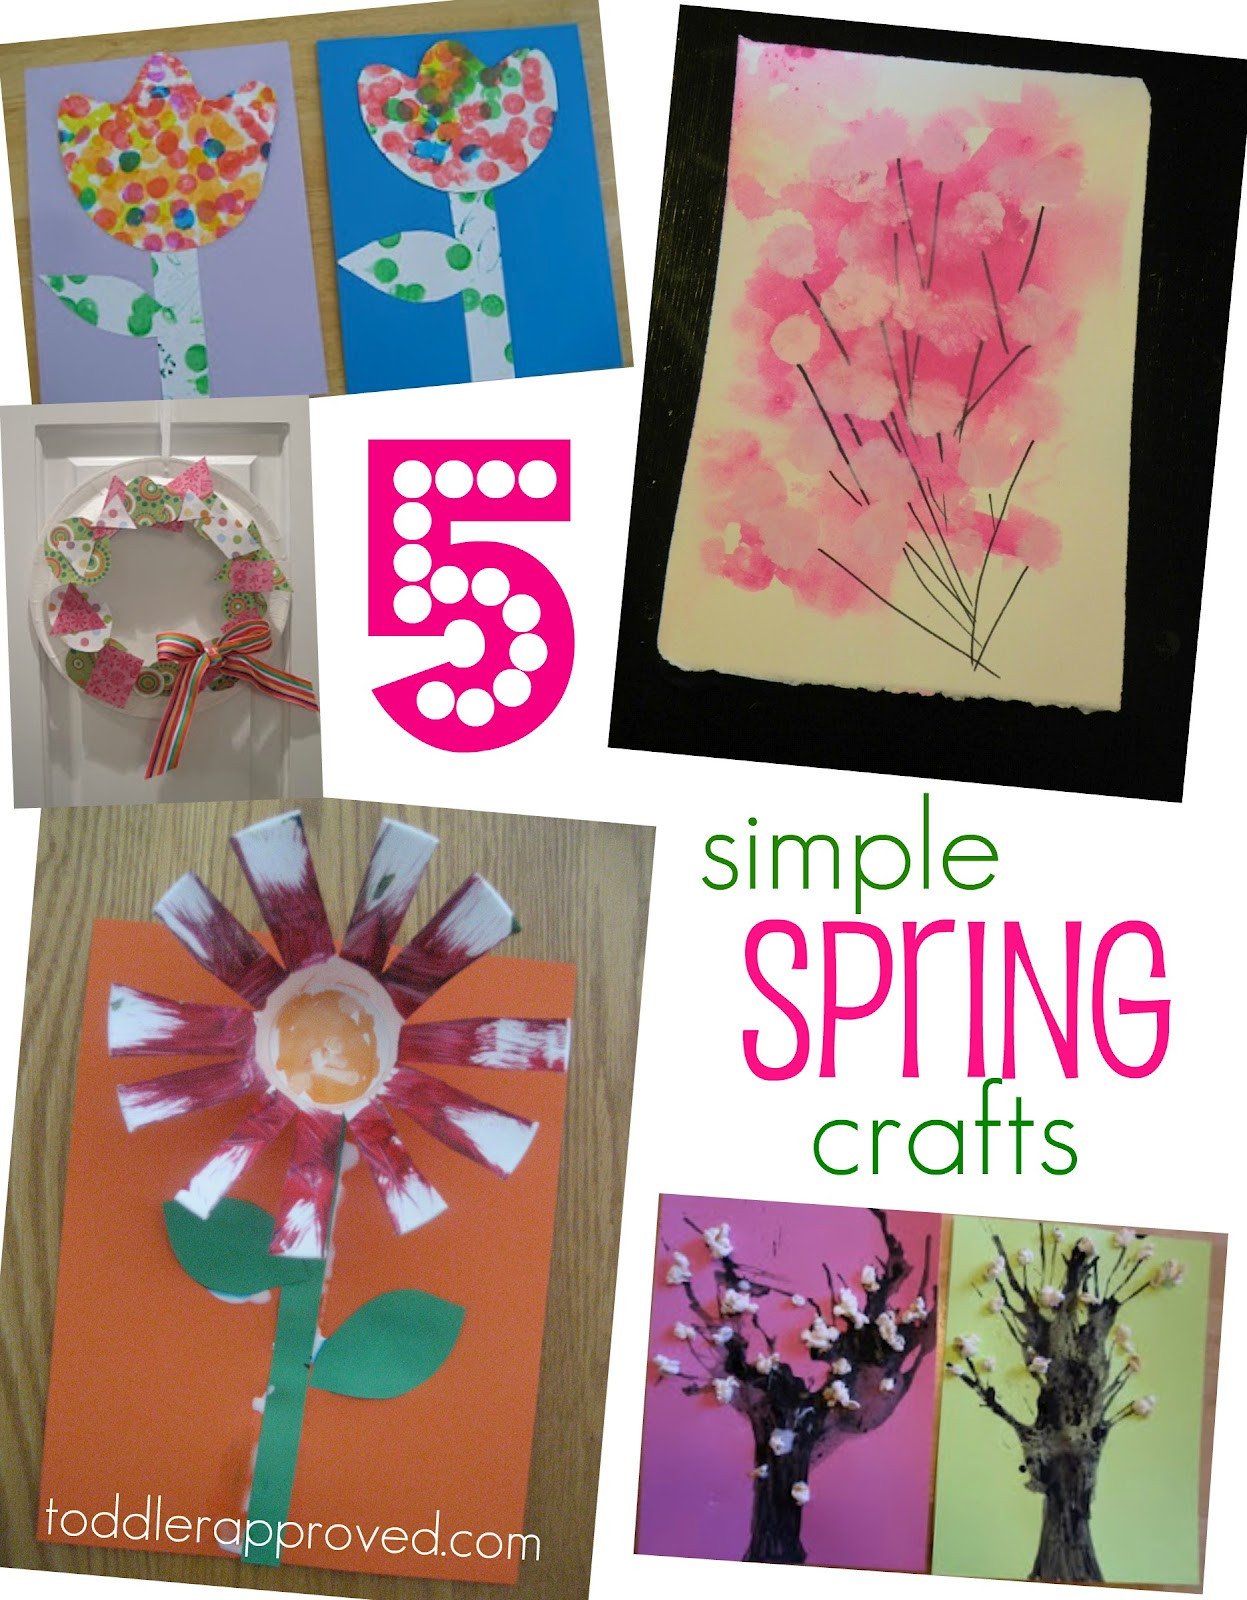 Spring Crafts For Toddlers
 Toddler Approved 5 Simple Spring Crafts